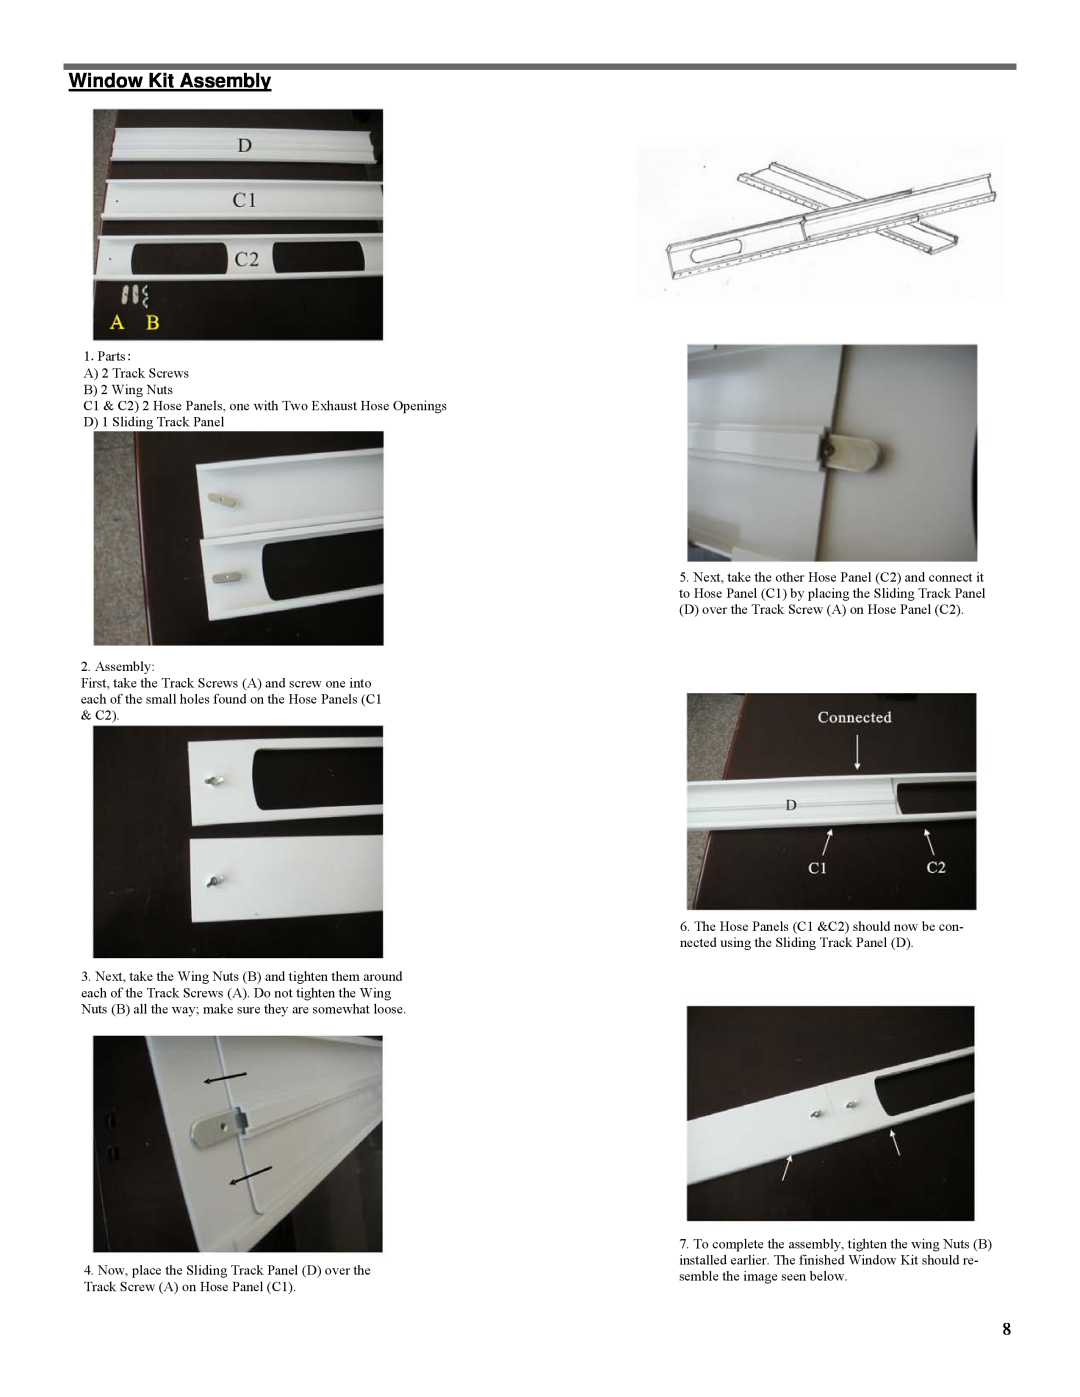 Soleus Air PE3-12R-03 manual Window Kit Assembly 